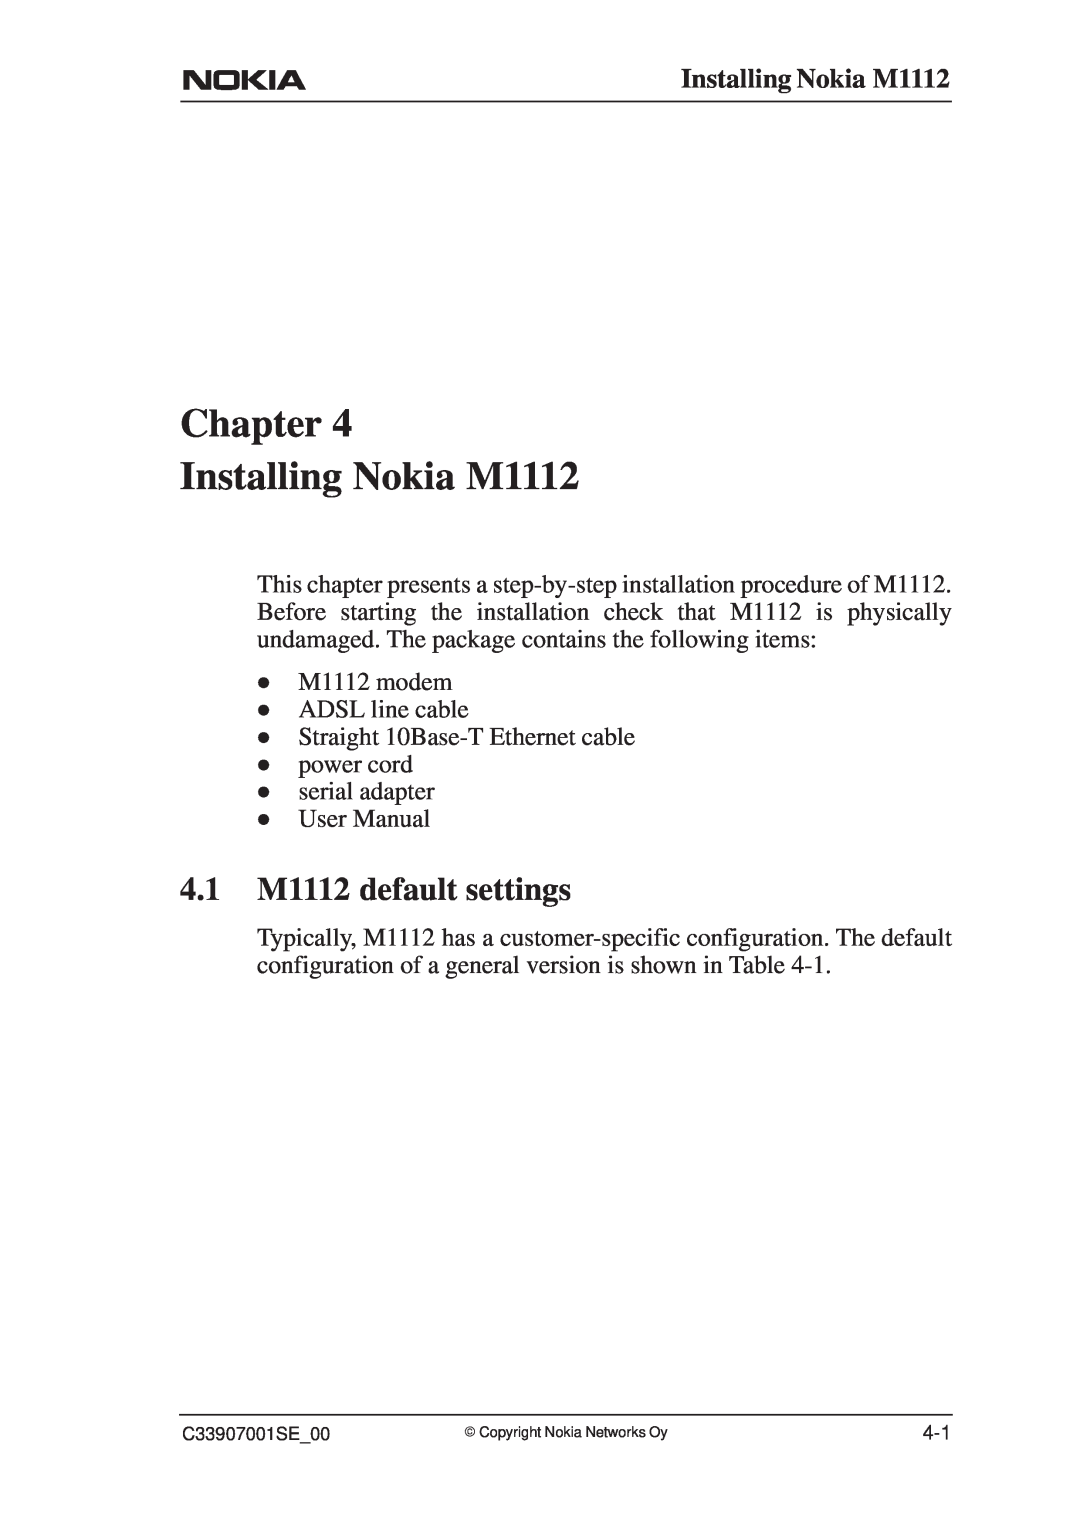 Nokia manual Chapter Installing Nokia M1112, 4.1 M1112 default settings 